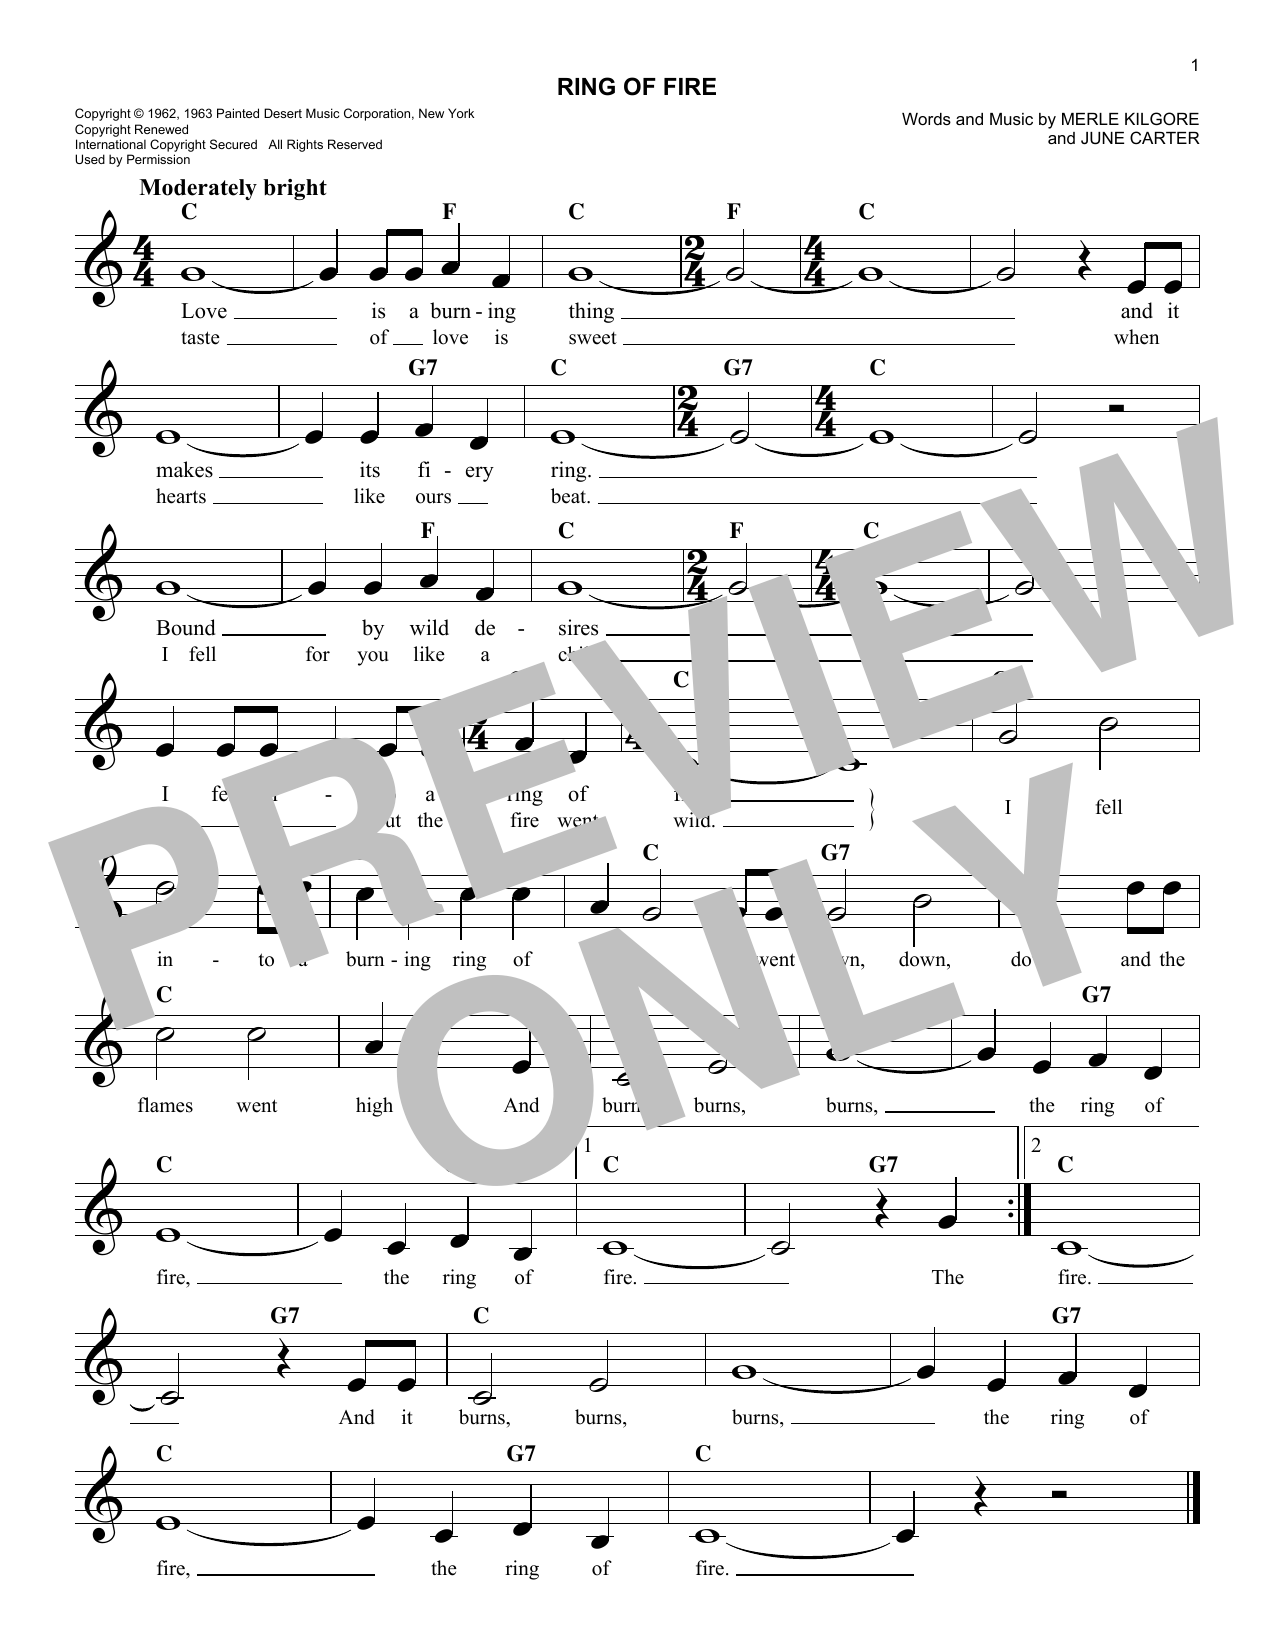 gezantschap Sportman Verborgen Johnny Cash "Ring Of Fire" Sheet Music Notes | Download Printable PDF Score  166059